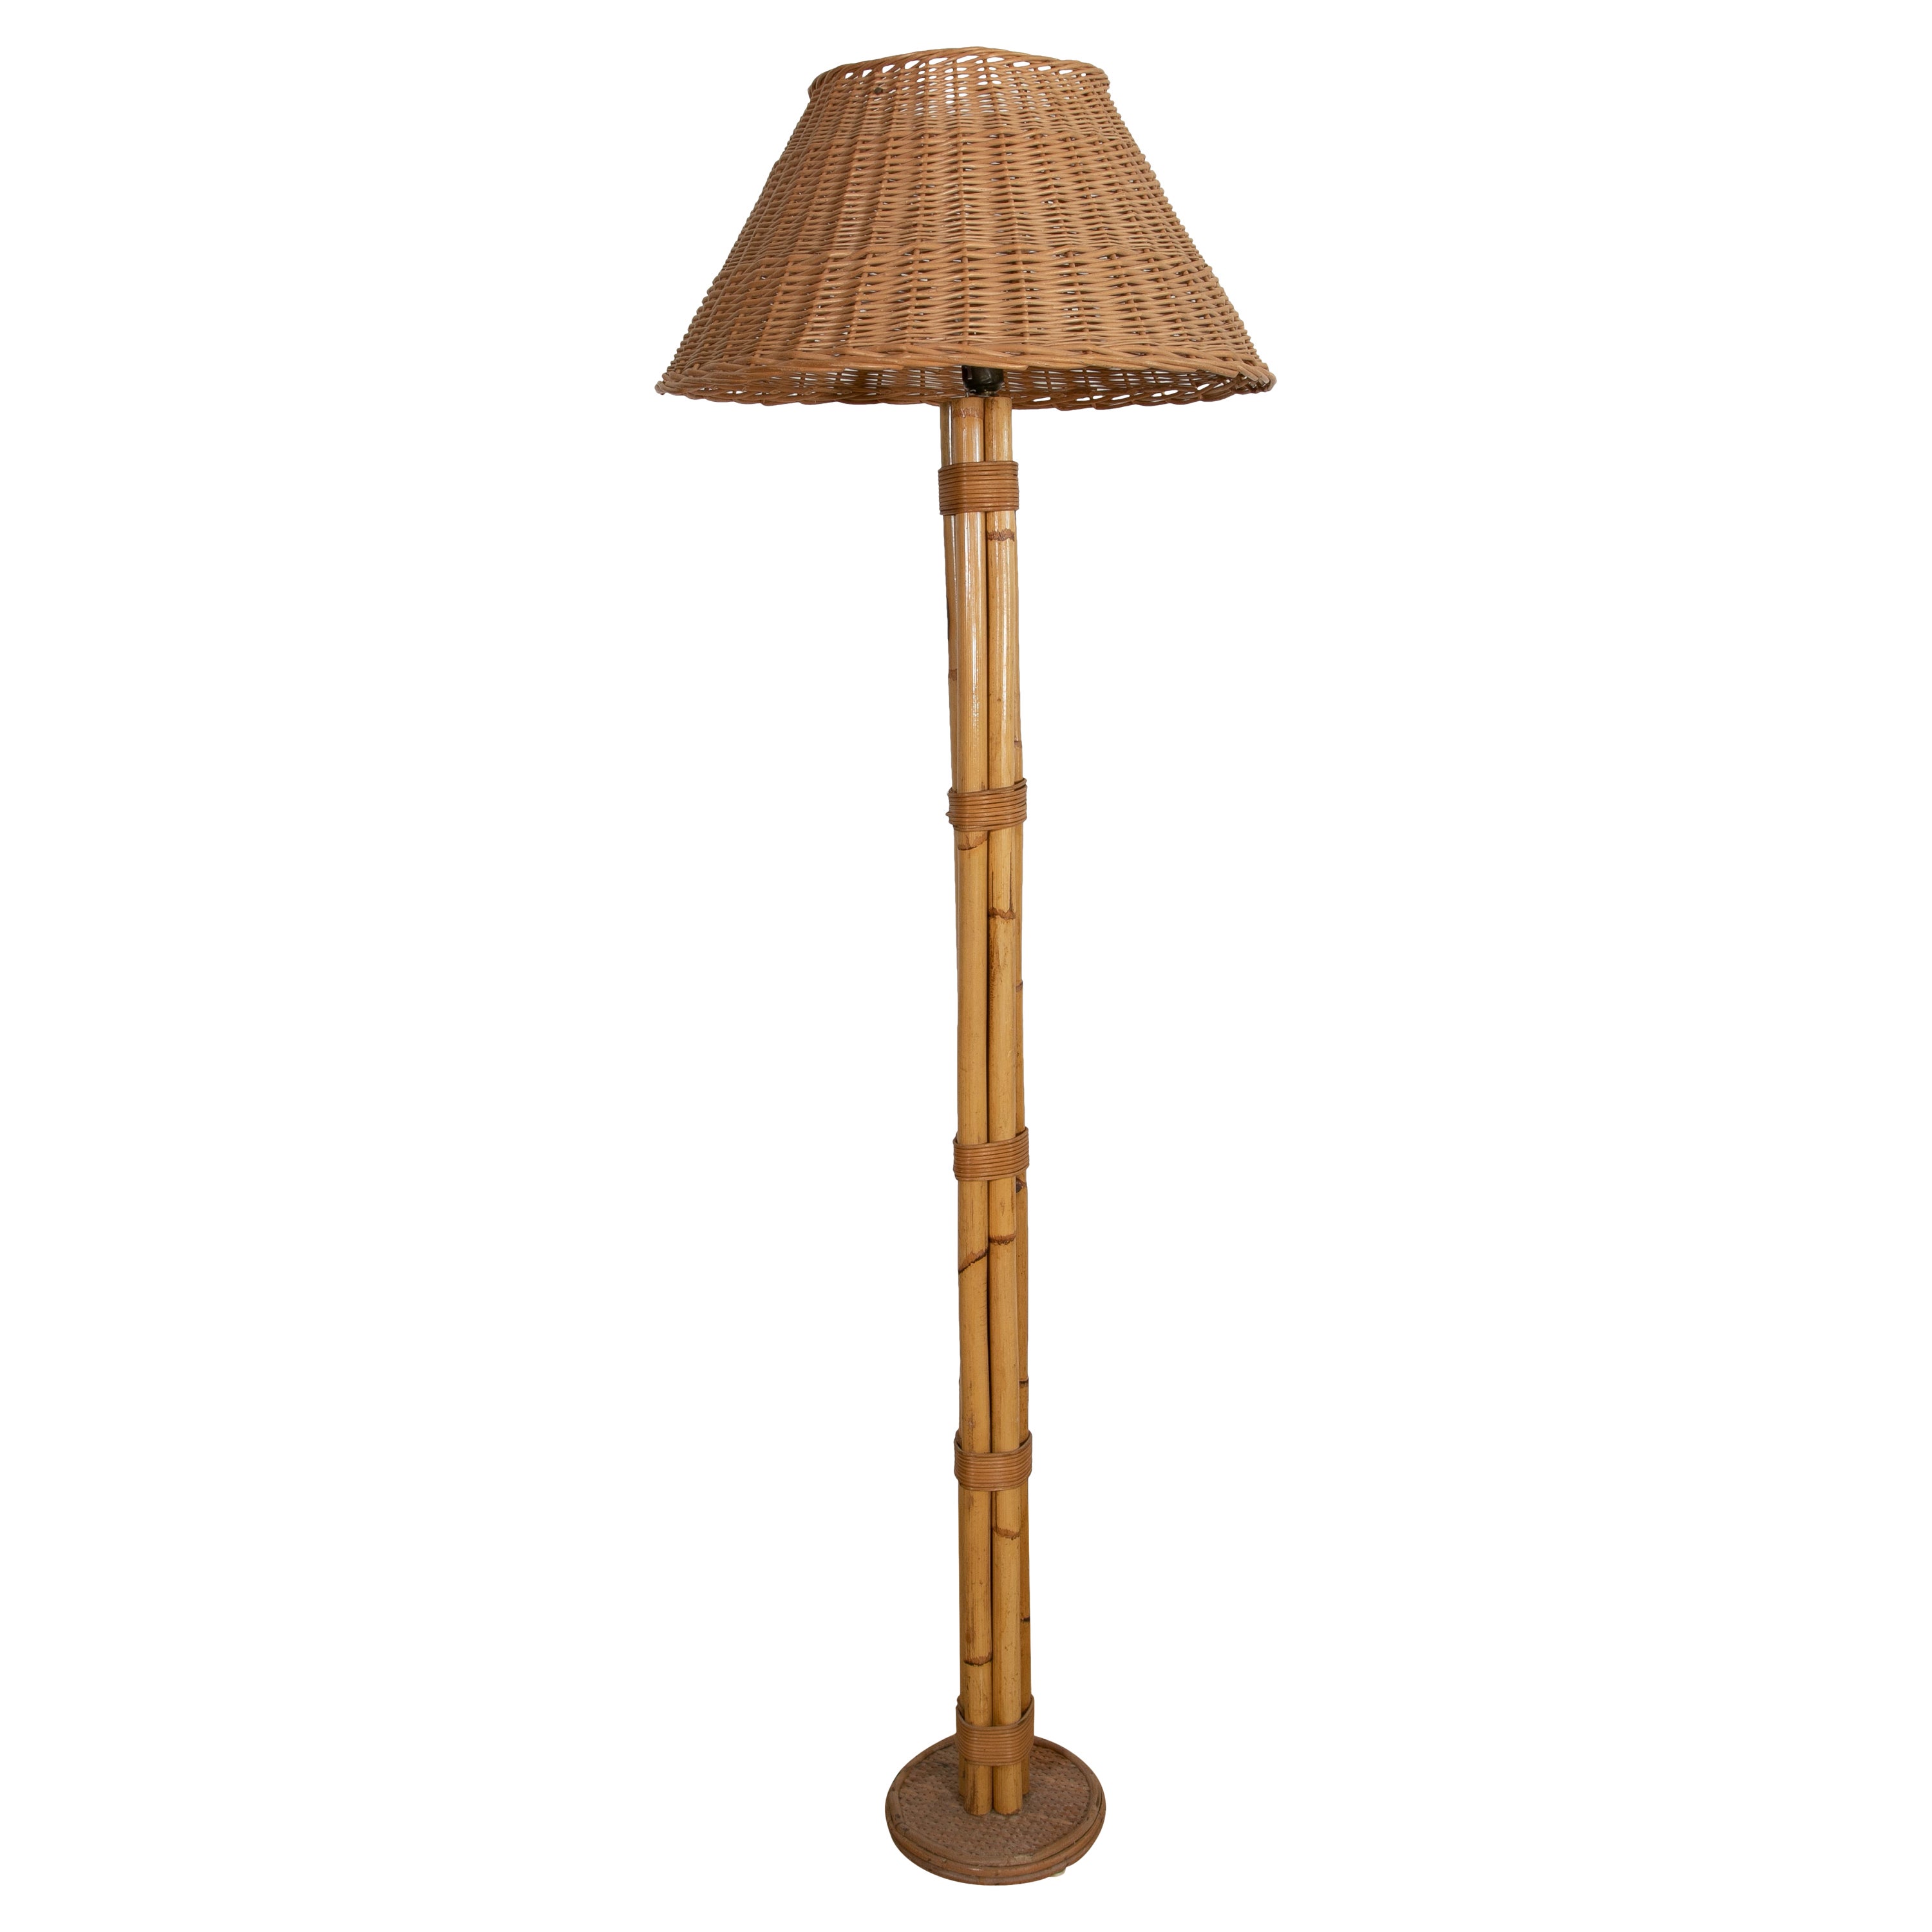 1970s, Spanish Bamboo Floor Lamp with Wicker Lampshade 